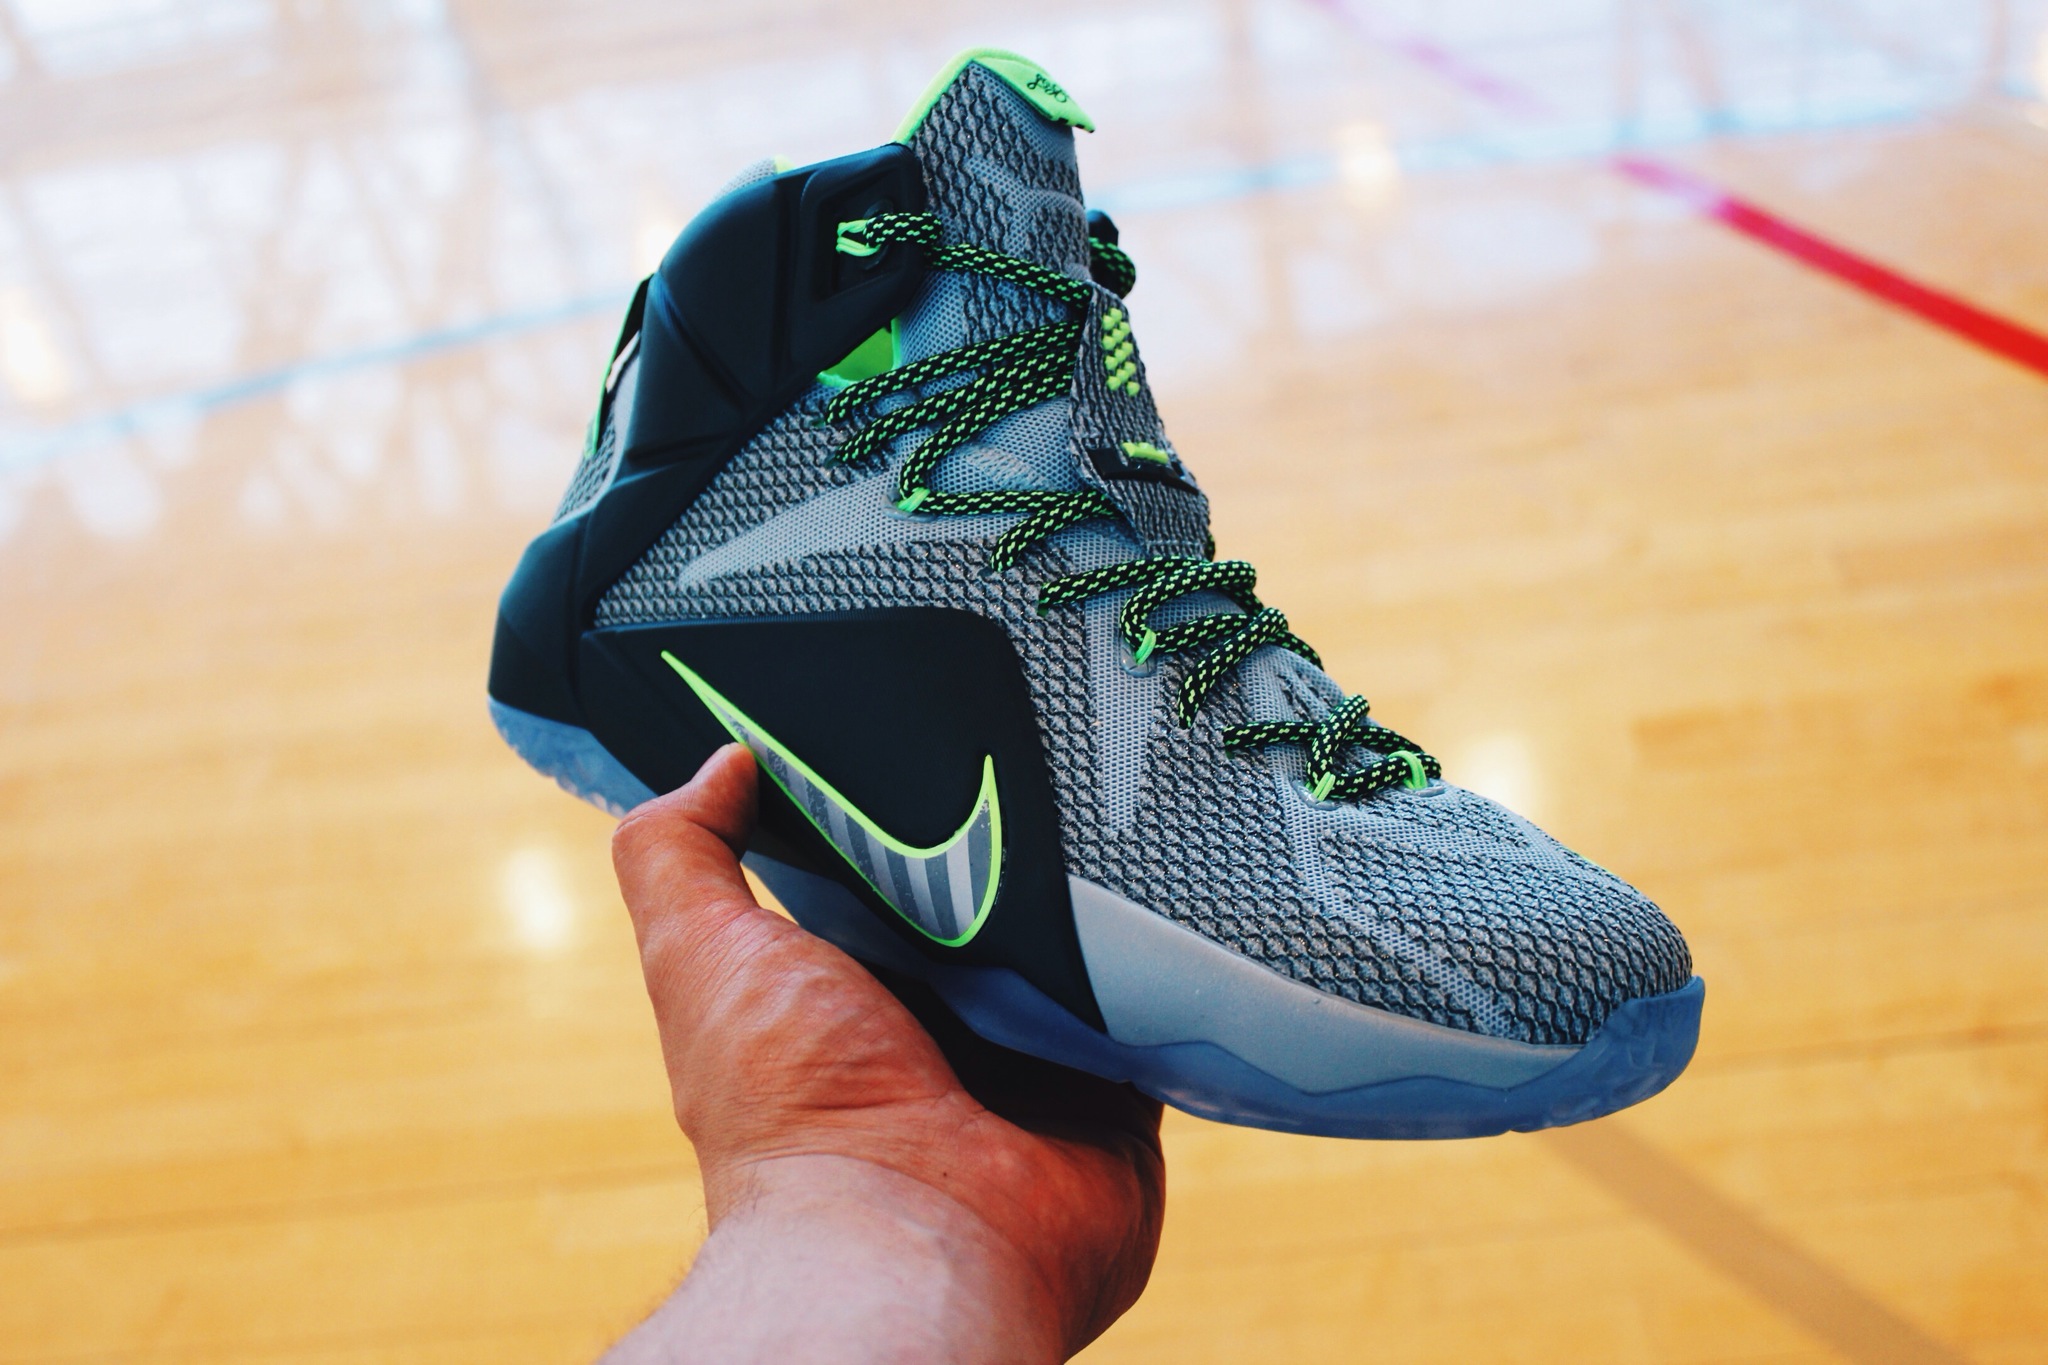 Nike Lebron 12 “Dunk Force” – Release Date